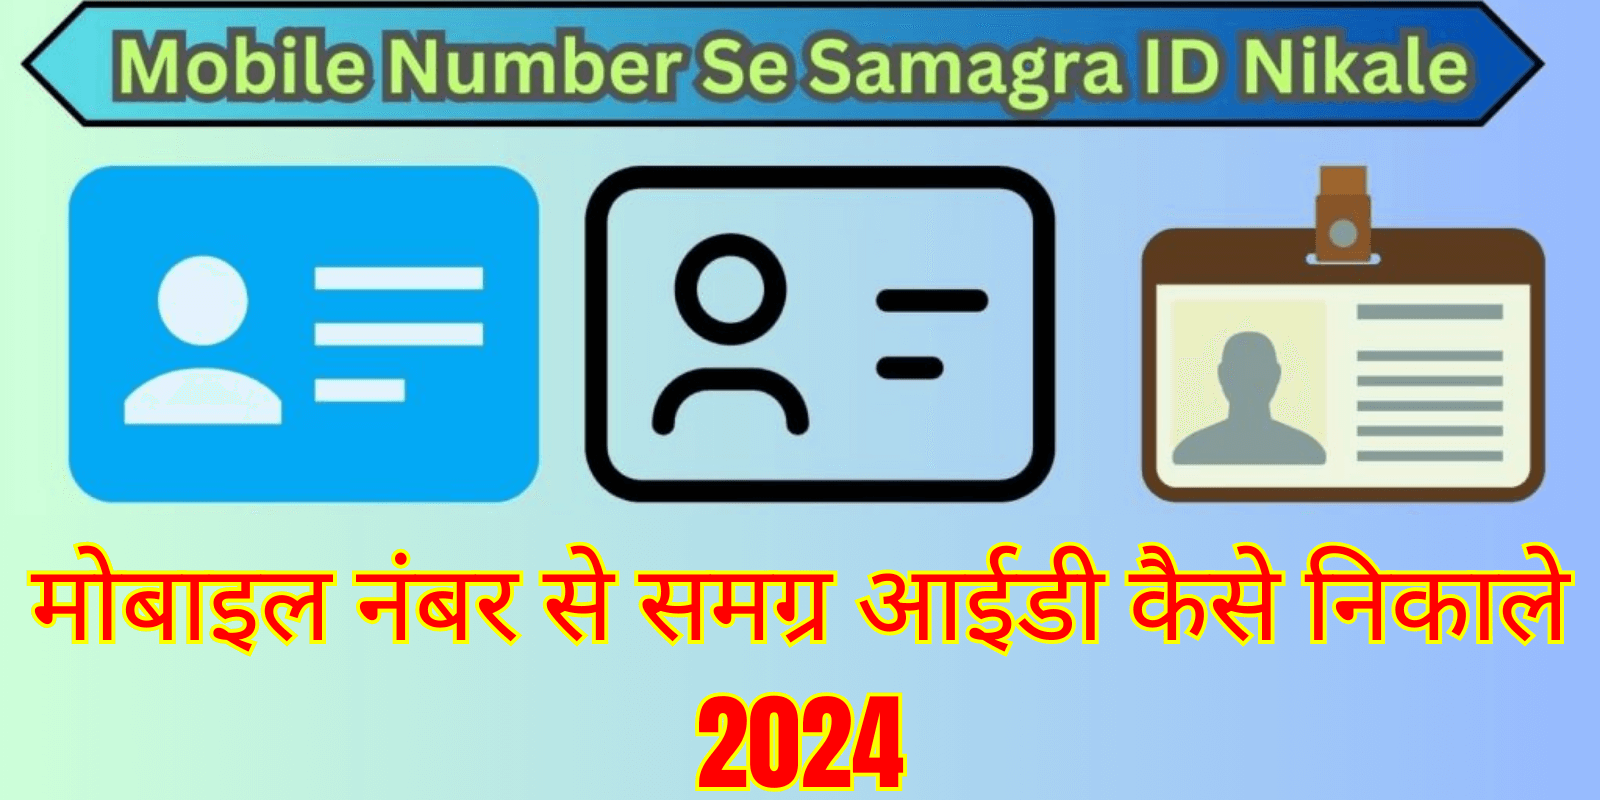 Mobile Number Se Samagra ID Nikale